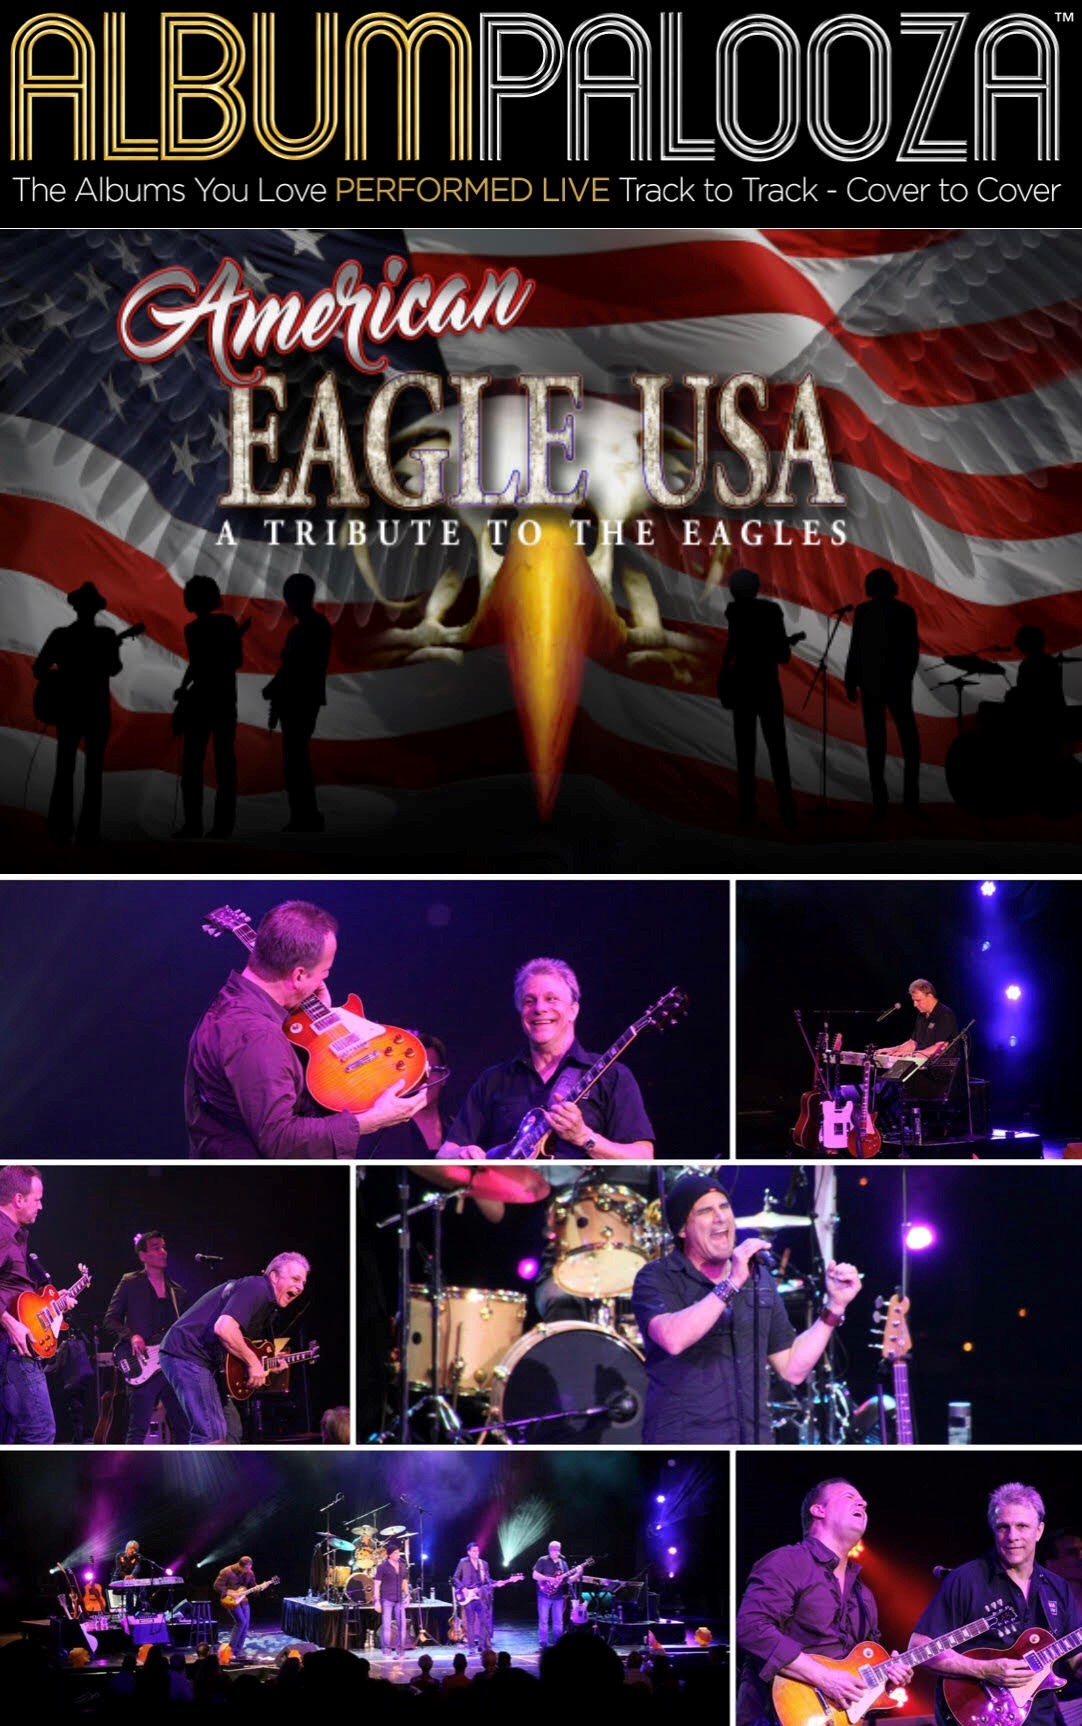 Eagle USA - A tribute to The Eagles